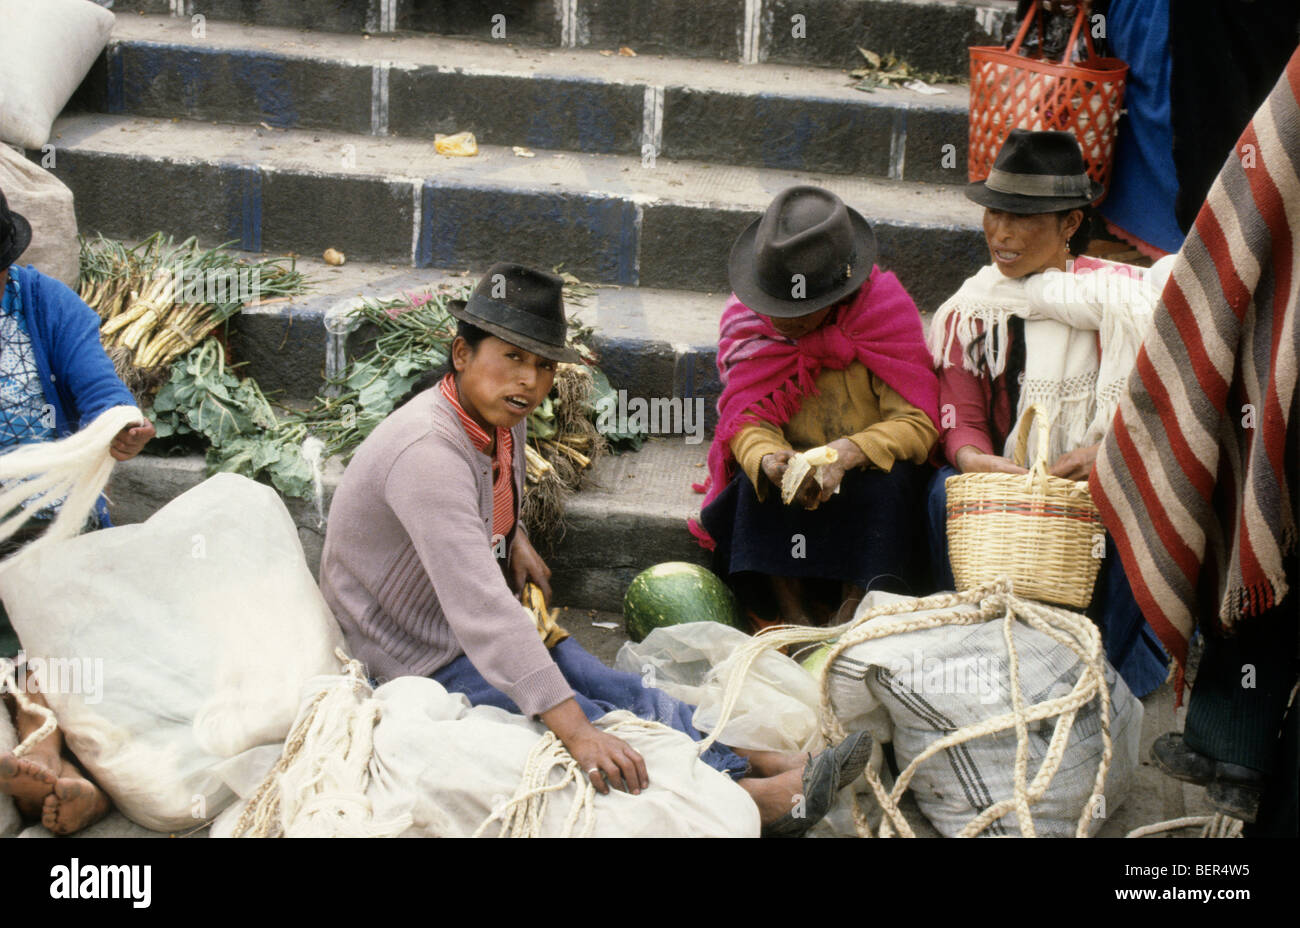 Three women sitting at base of steps amidst sacks of vegetables. Ecuador highlands local market. Stock Photo